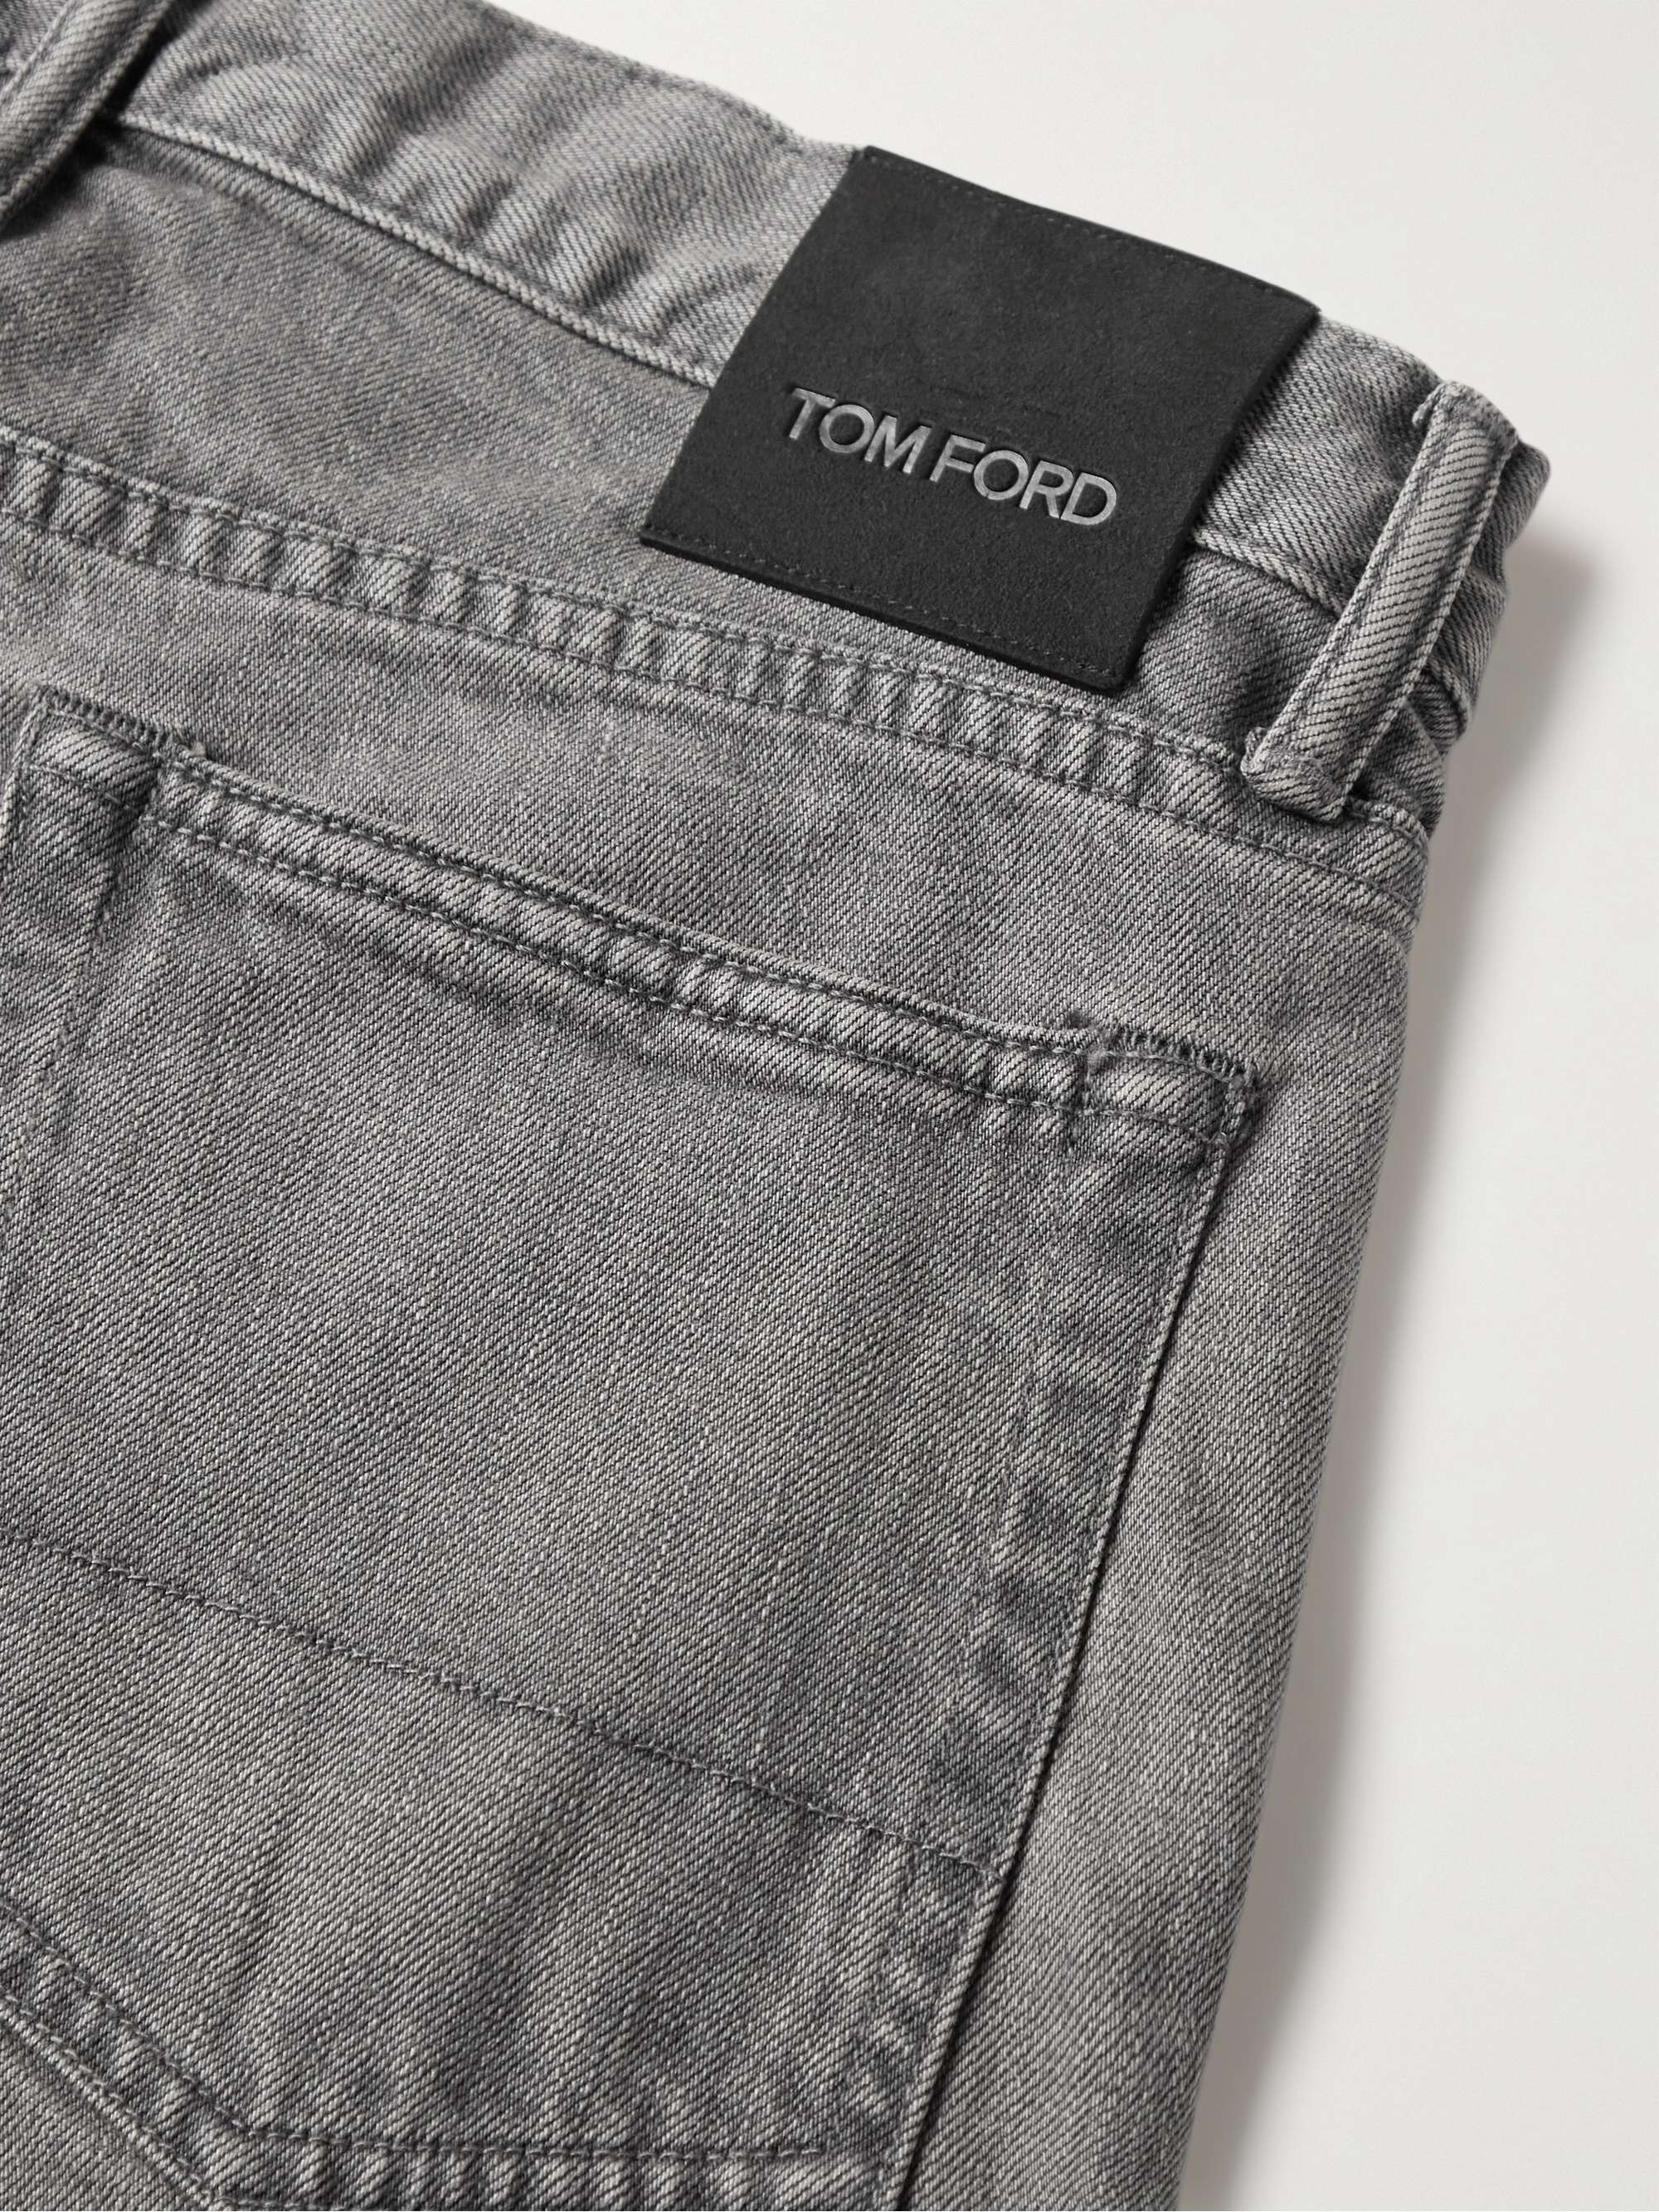 TOM FORD Slim-Fit Selvedge Denim Jeans